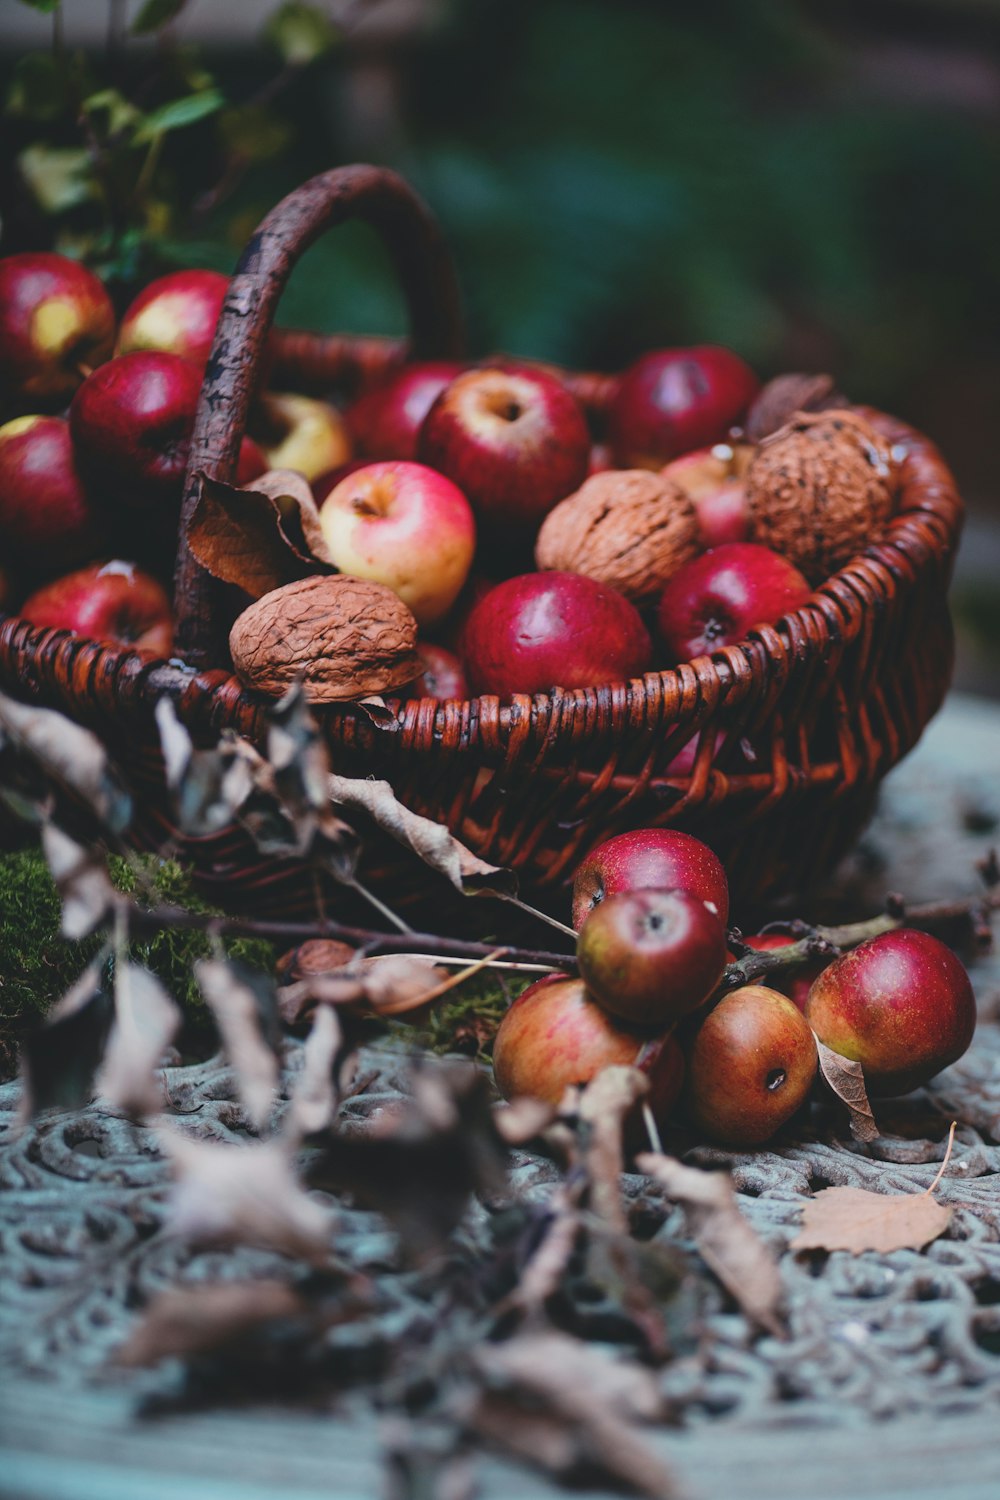 red apple fruits on brown wicker basket